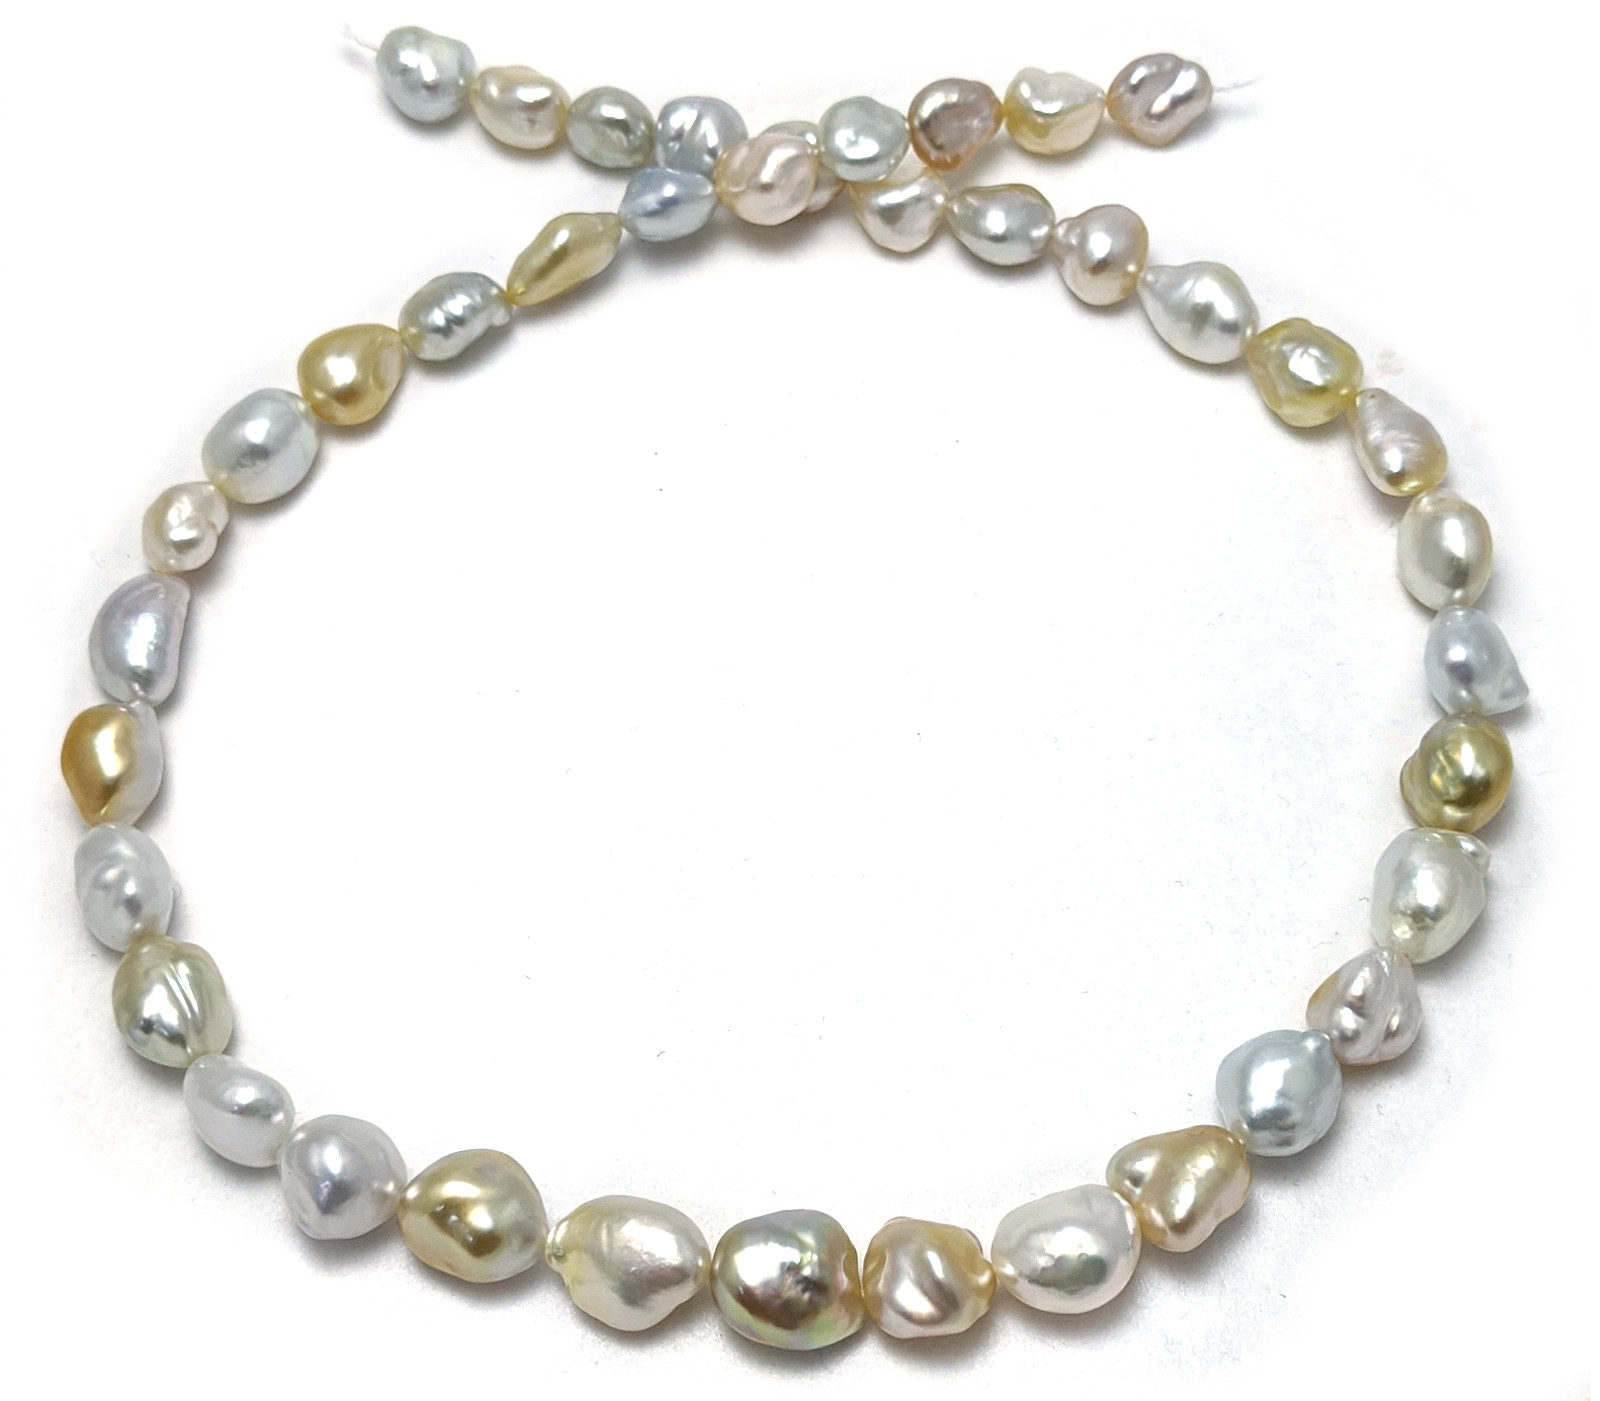 Gemini .Gems South Sea Pearl Necklace 10mm Original Certified Fresh Water  Pearls Neckpiece 54 Beads Safed Sachhe Moti Ki Mala पर्ल नेकलेस मोती माला  Motiyon Ke Haar for Wearing Purpose : Amazon.in: